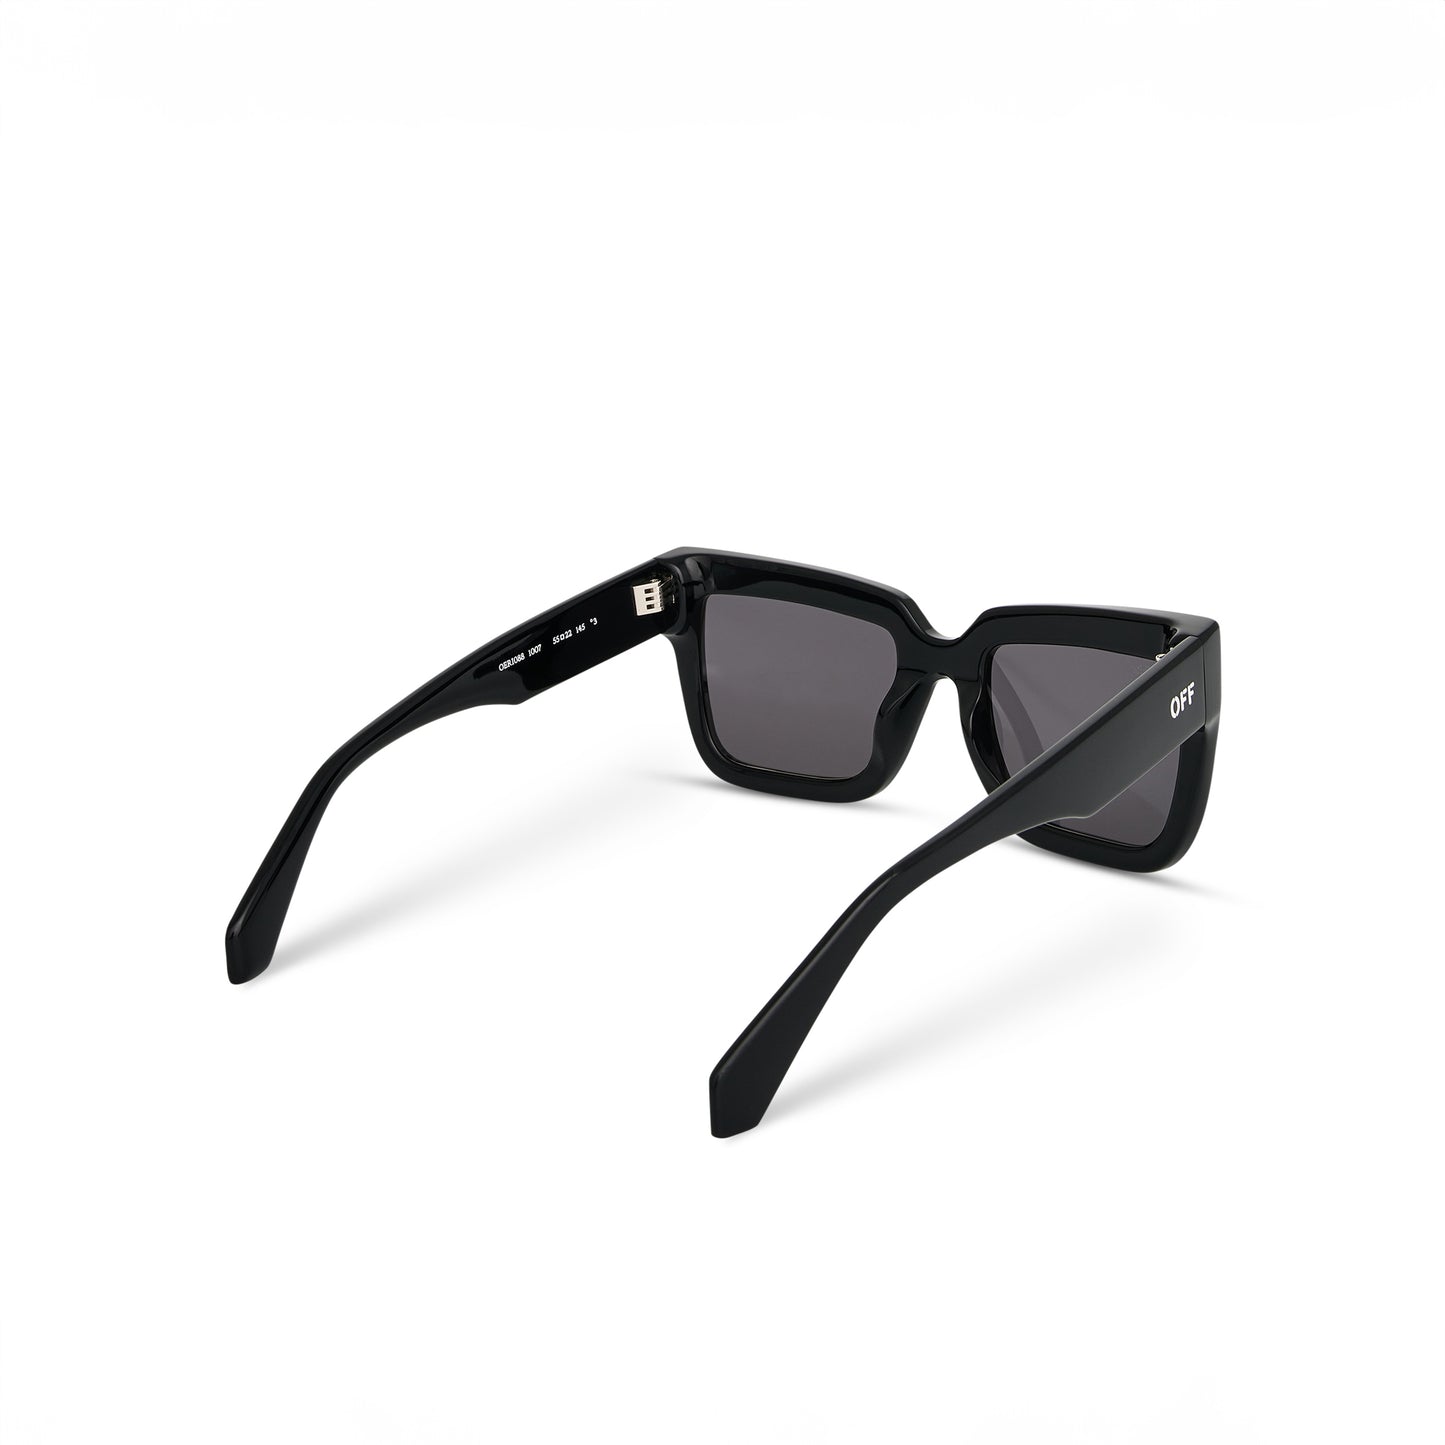 Firenze Sunglasses in Black /Dark Grey